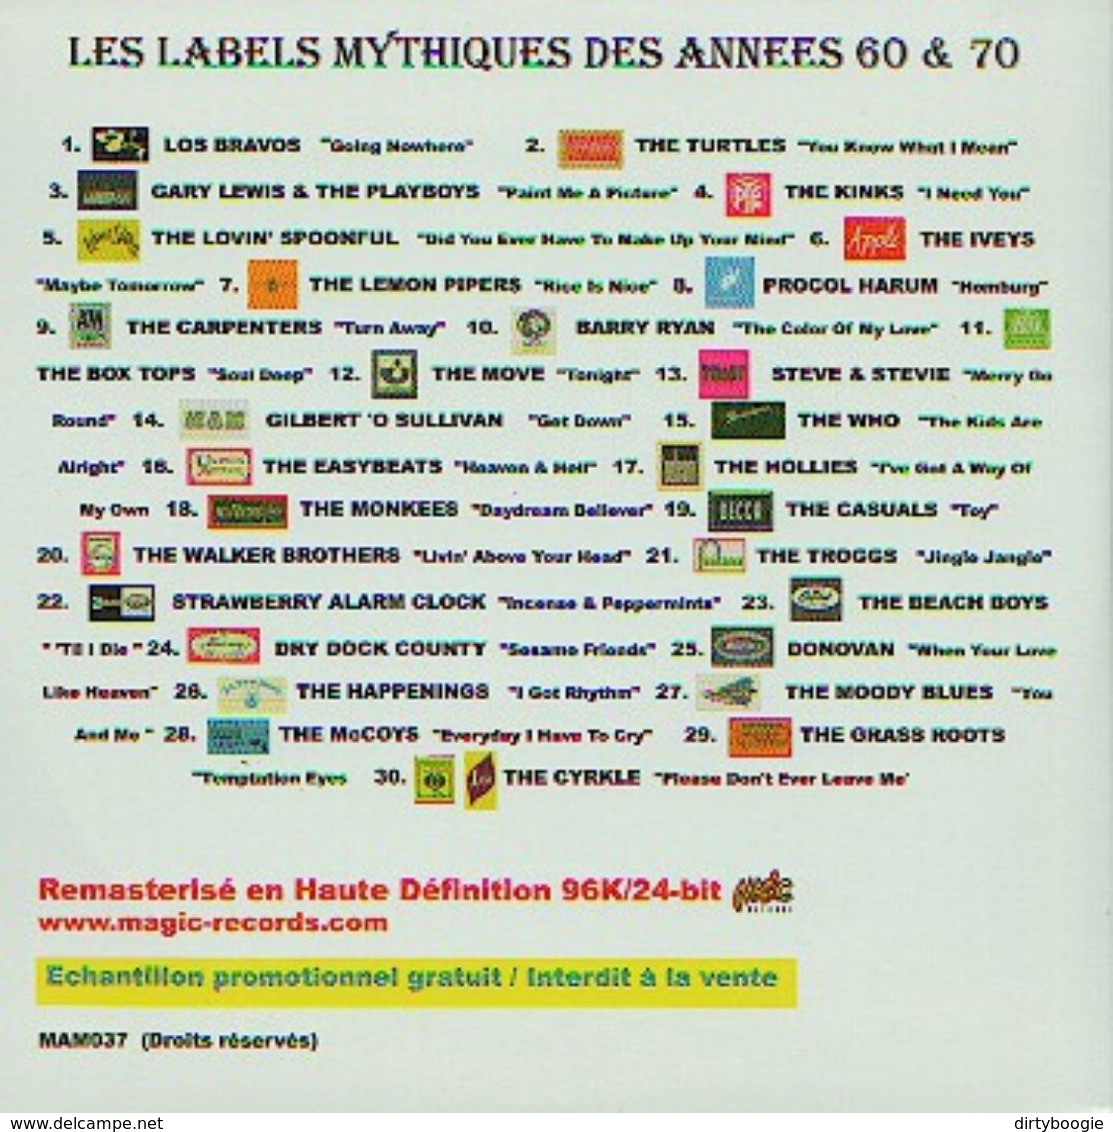 Les LABELS MYTHIQUES DES ANNEES 60 & 70 - CD - MAGIC RECORDS - Los BRAVOS - TURTLES - KINKS - LOVIN' SPOONFUL - MOVE - Rock